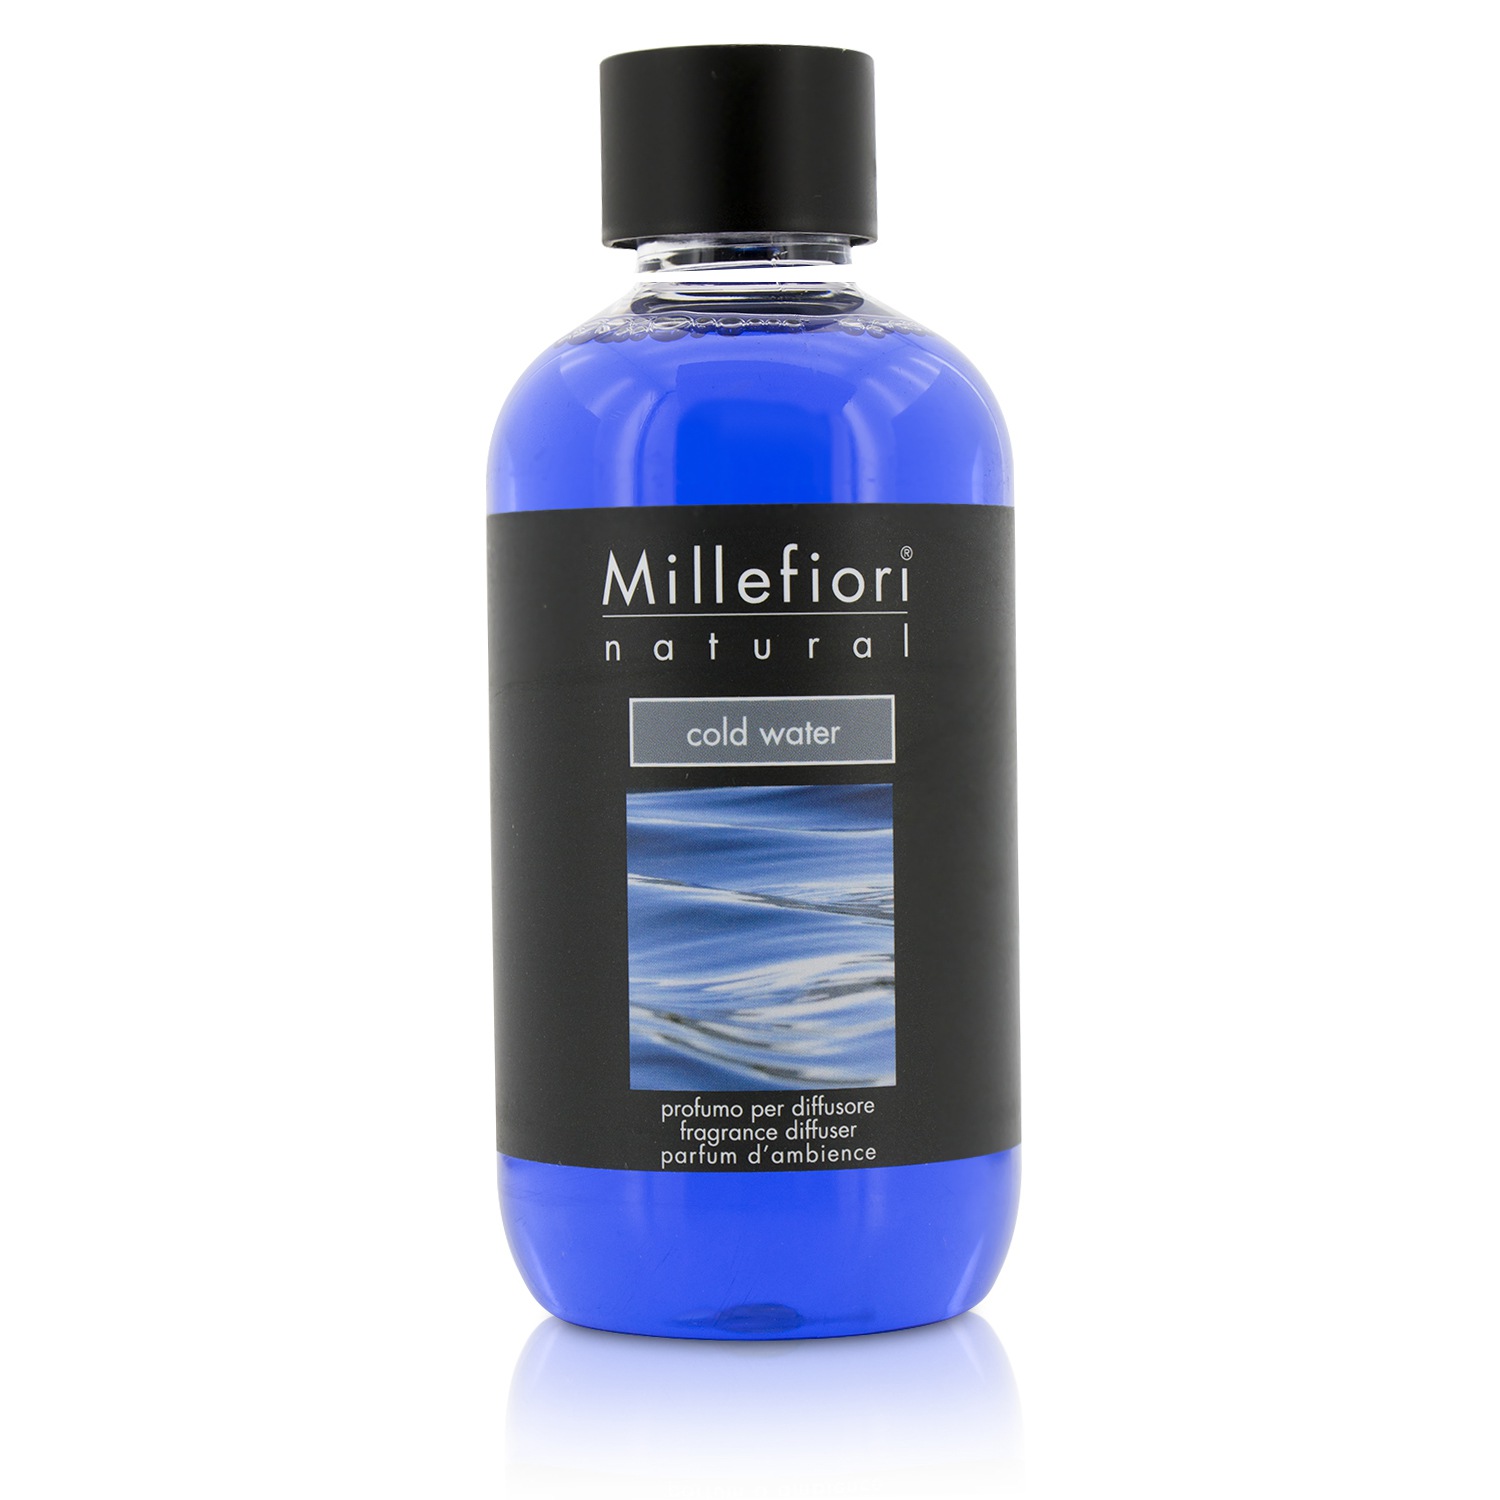 Natural Fragrance Diffuser Refill - Cold Water Millefiori Image